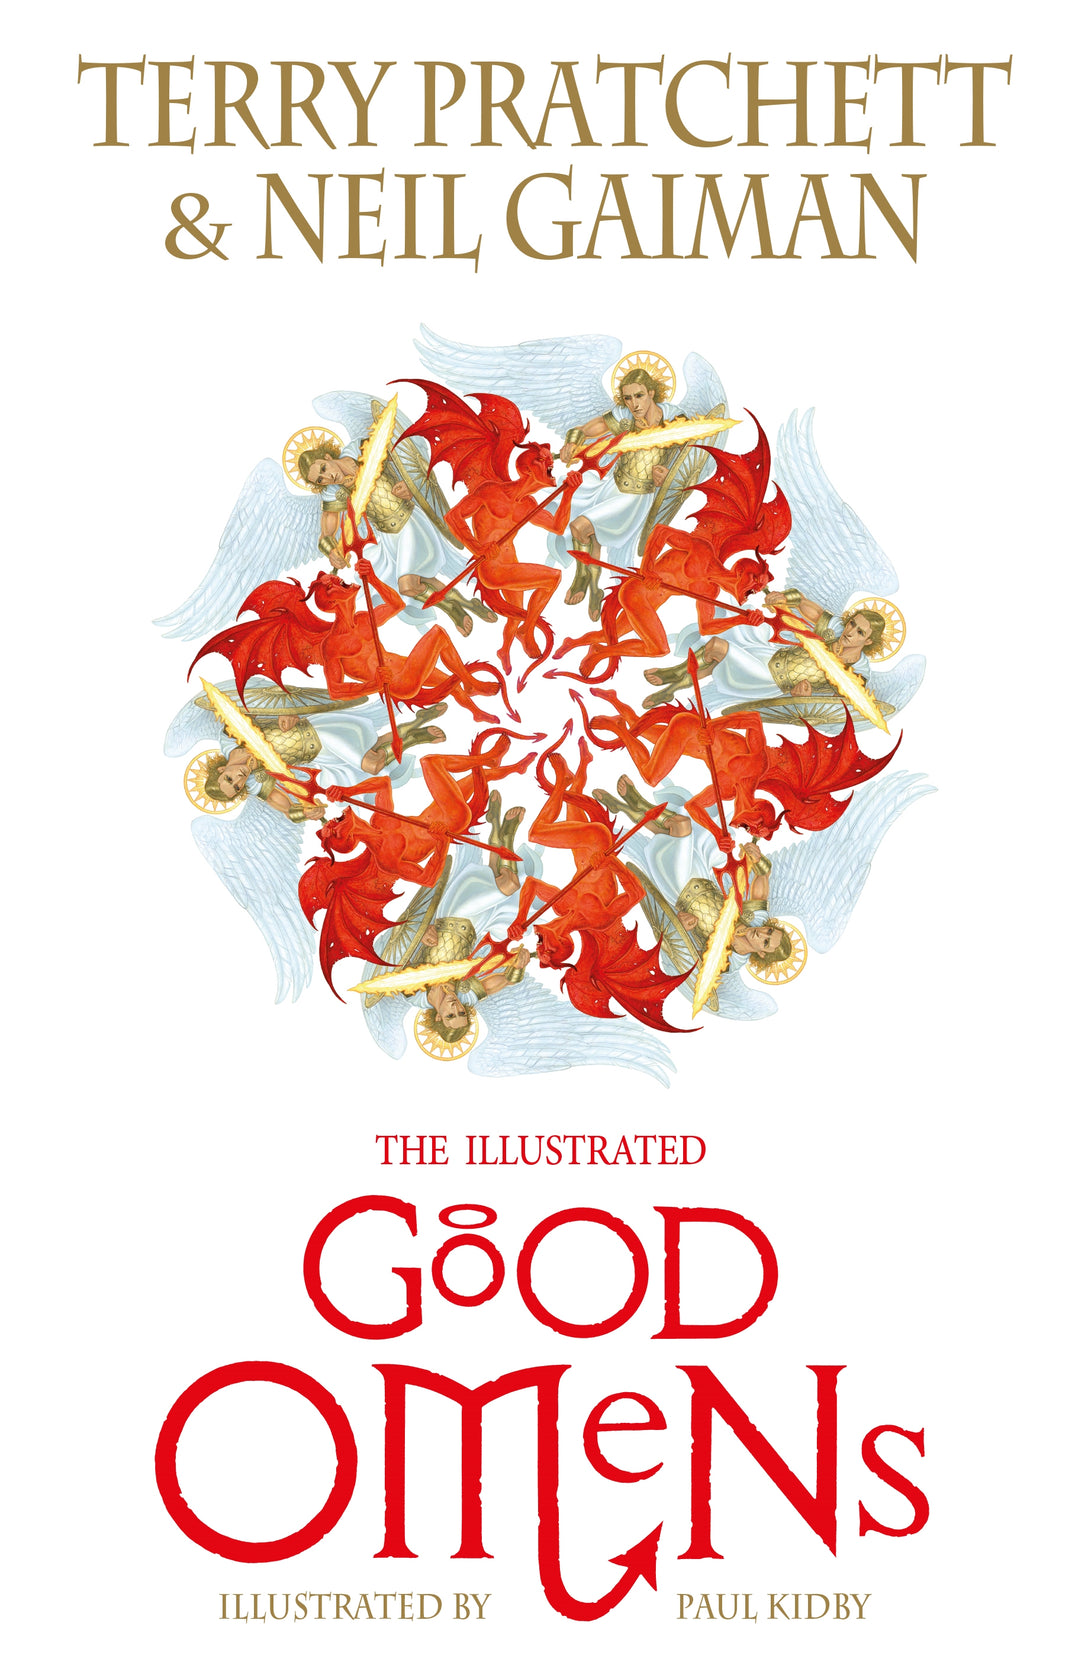 The Illustrated Good Omens by Paul Kidby, Neil Gaiman, Terry Pratchett